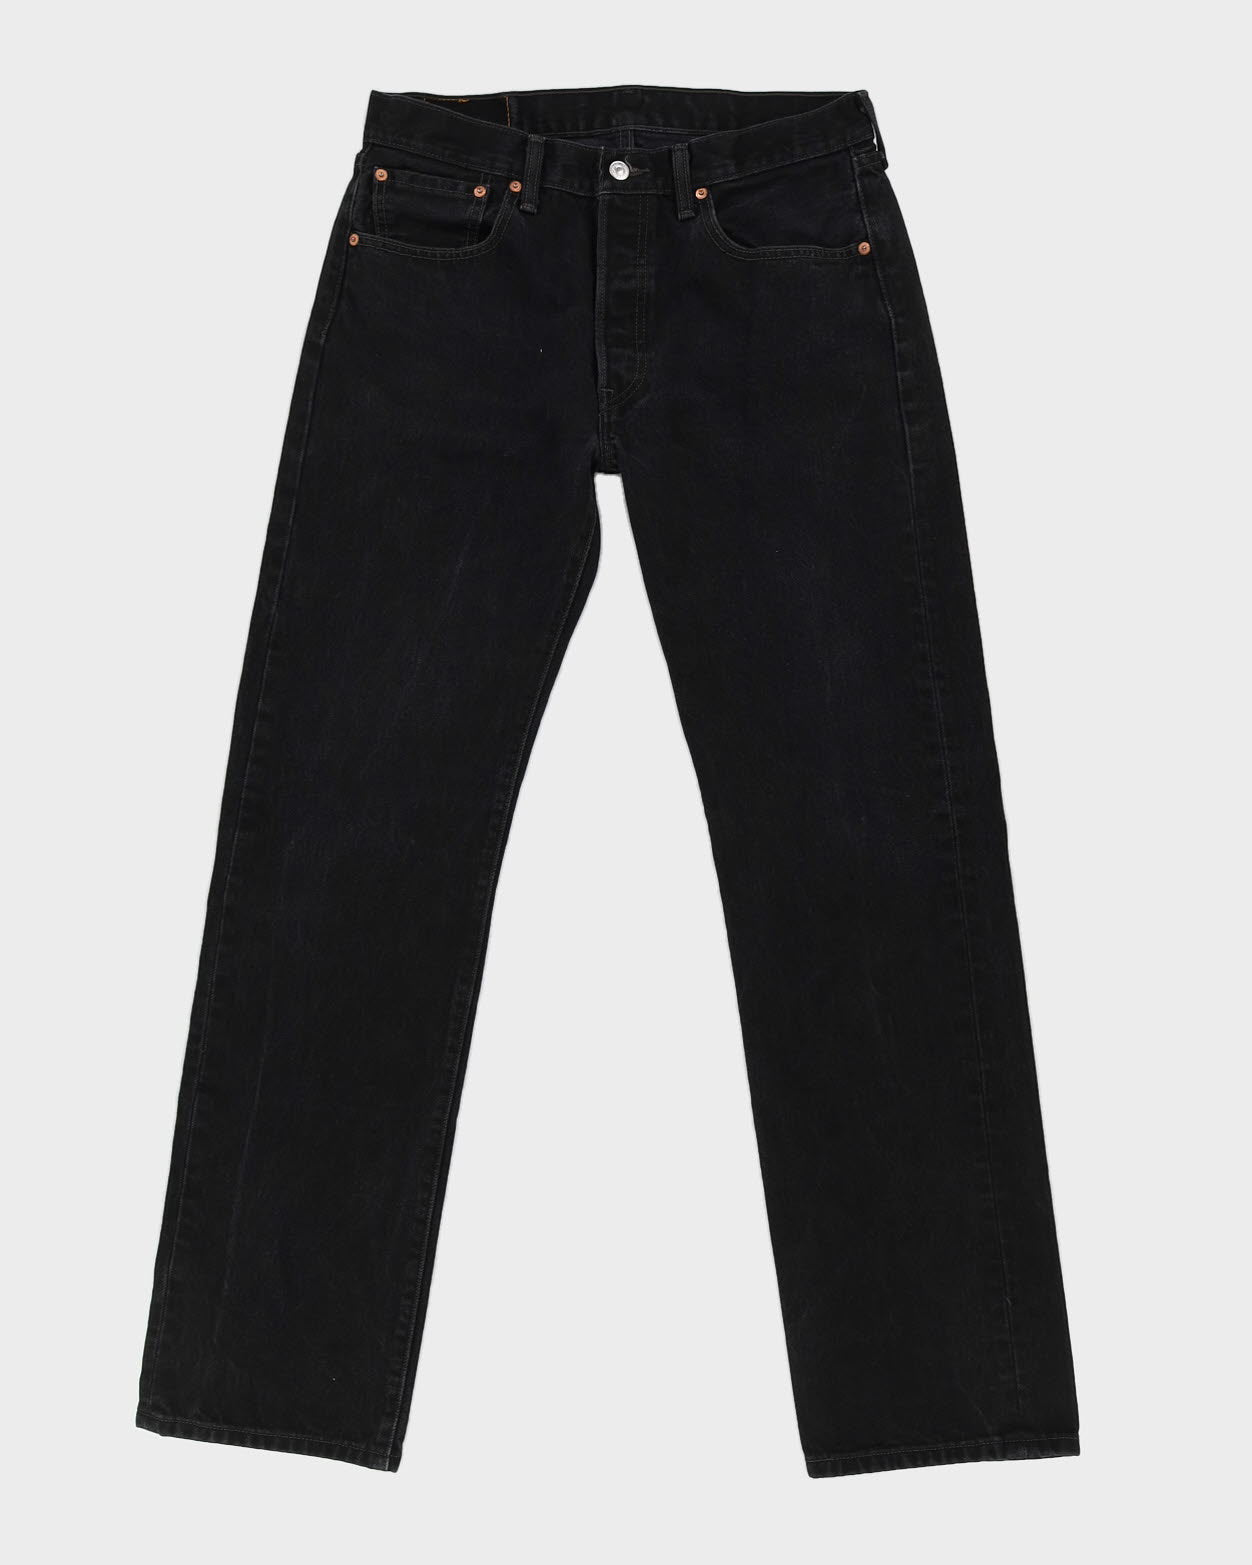 Levi's 501Black Jeans - W33  L34